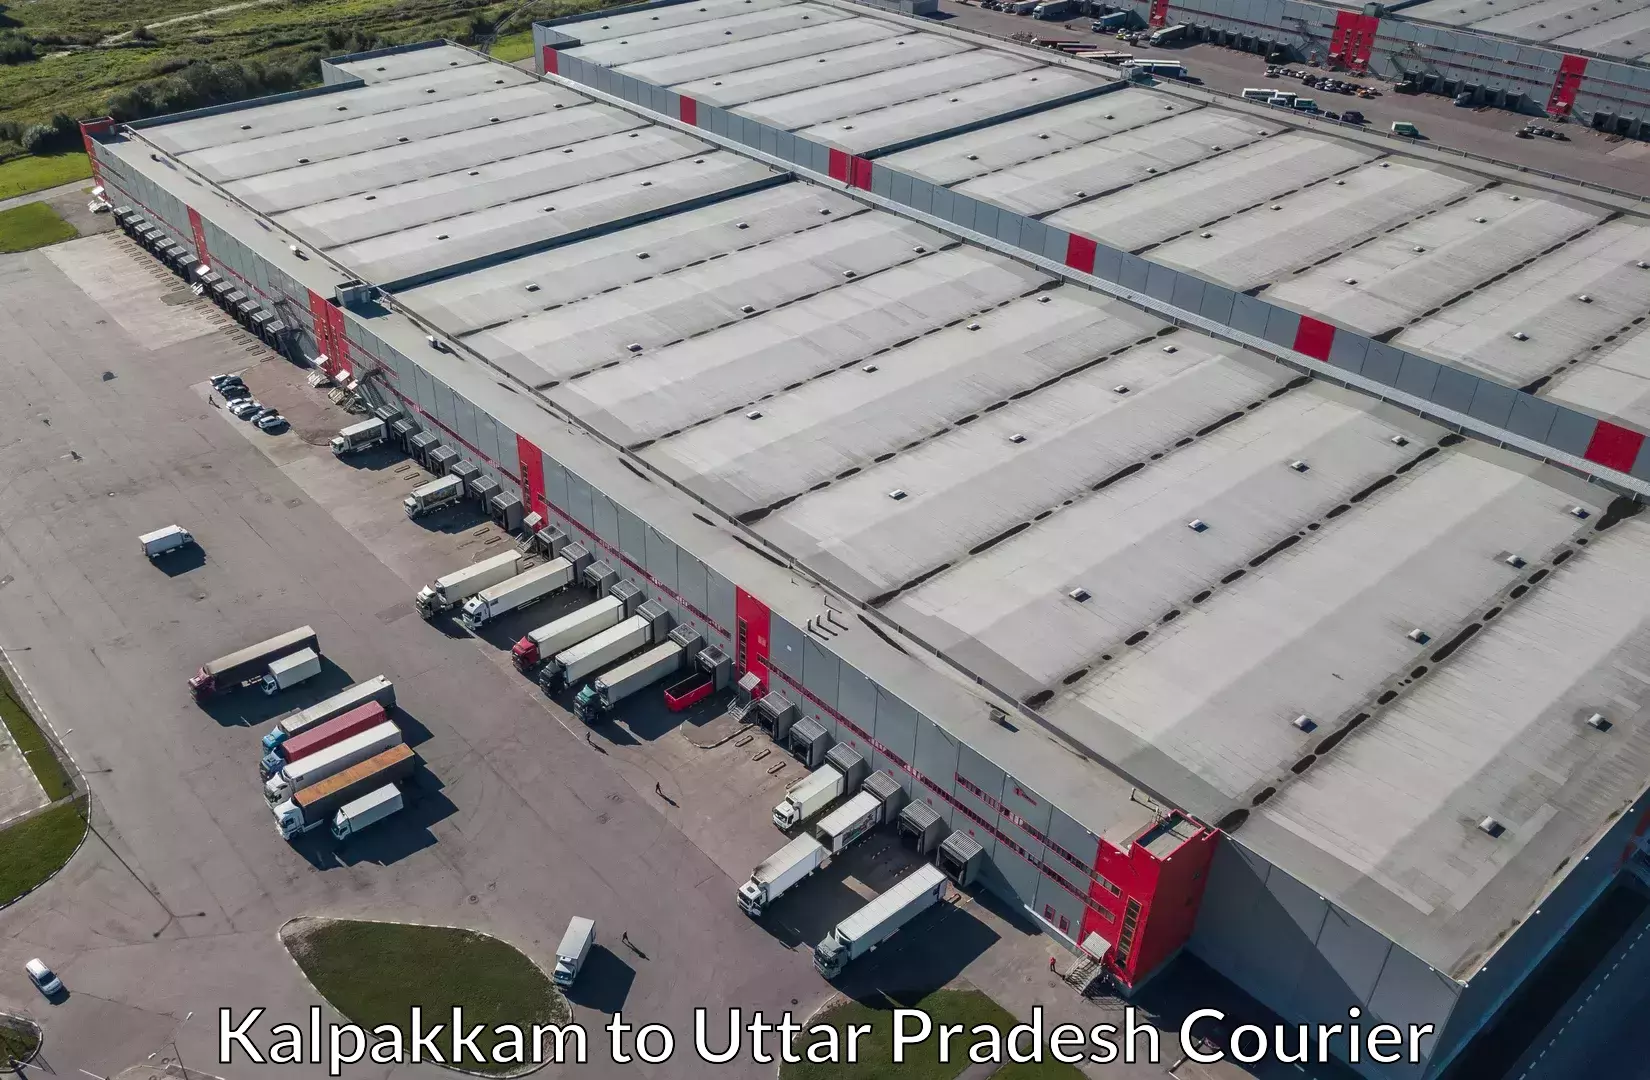 Luggage shipment specialists Kalpakkam to Uttar Pradesh